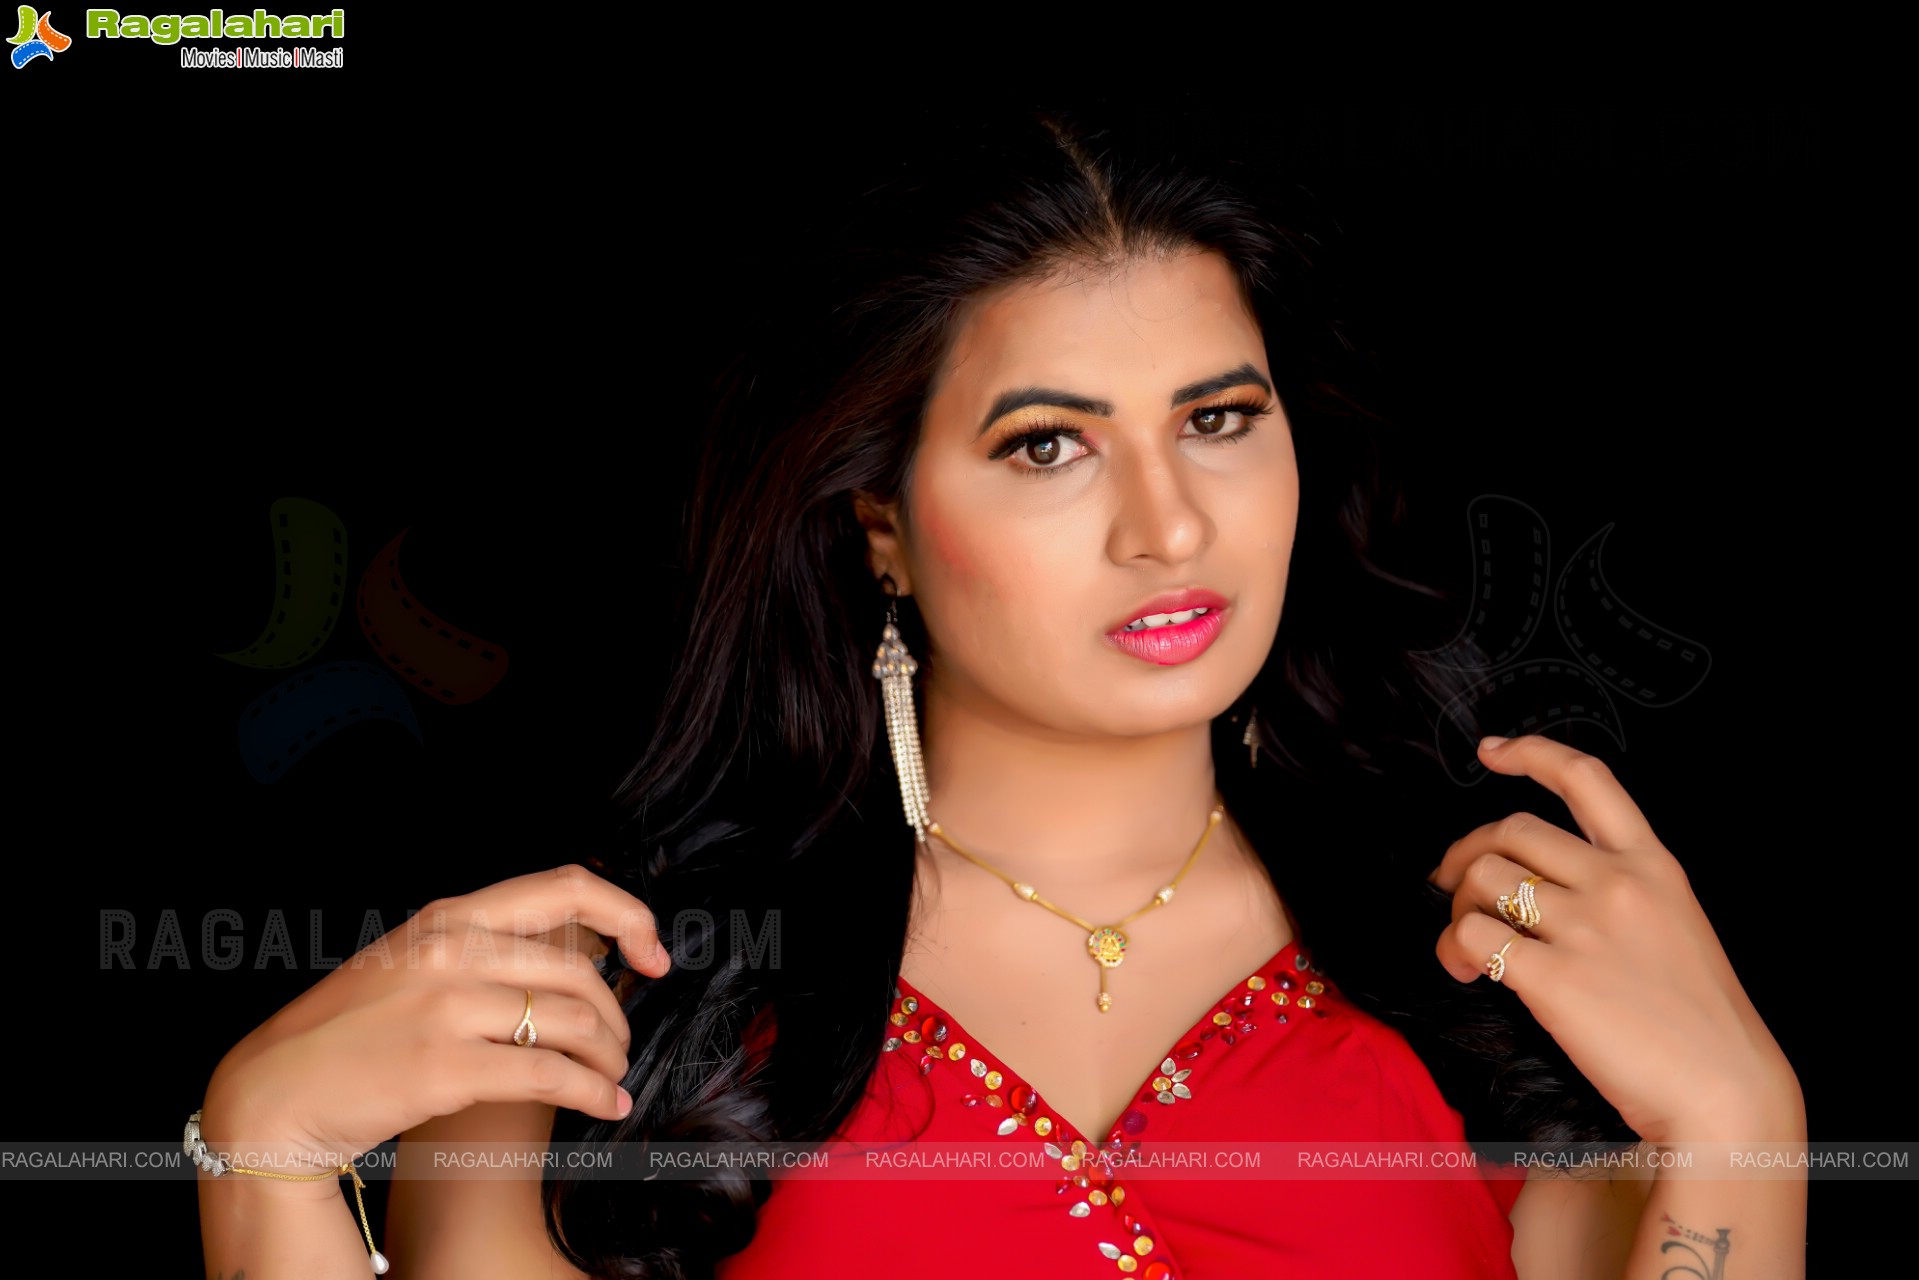 Anusha Venugopal in Red High Slit Maxi Dress, Exclusive Photo Shoot